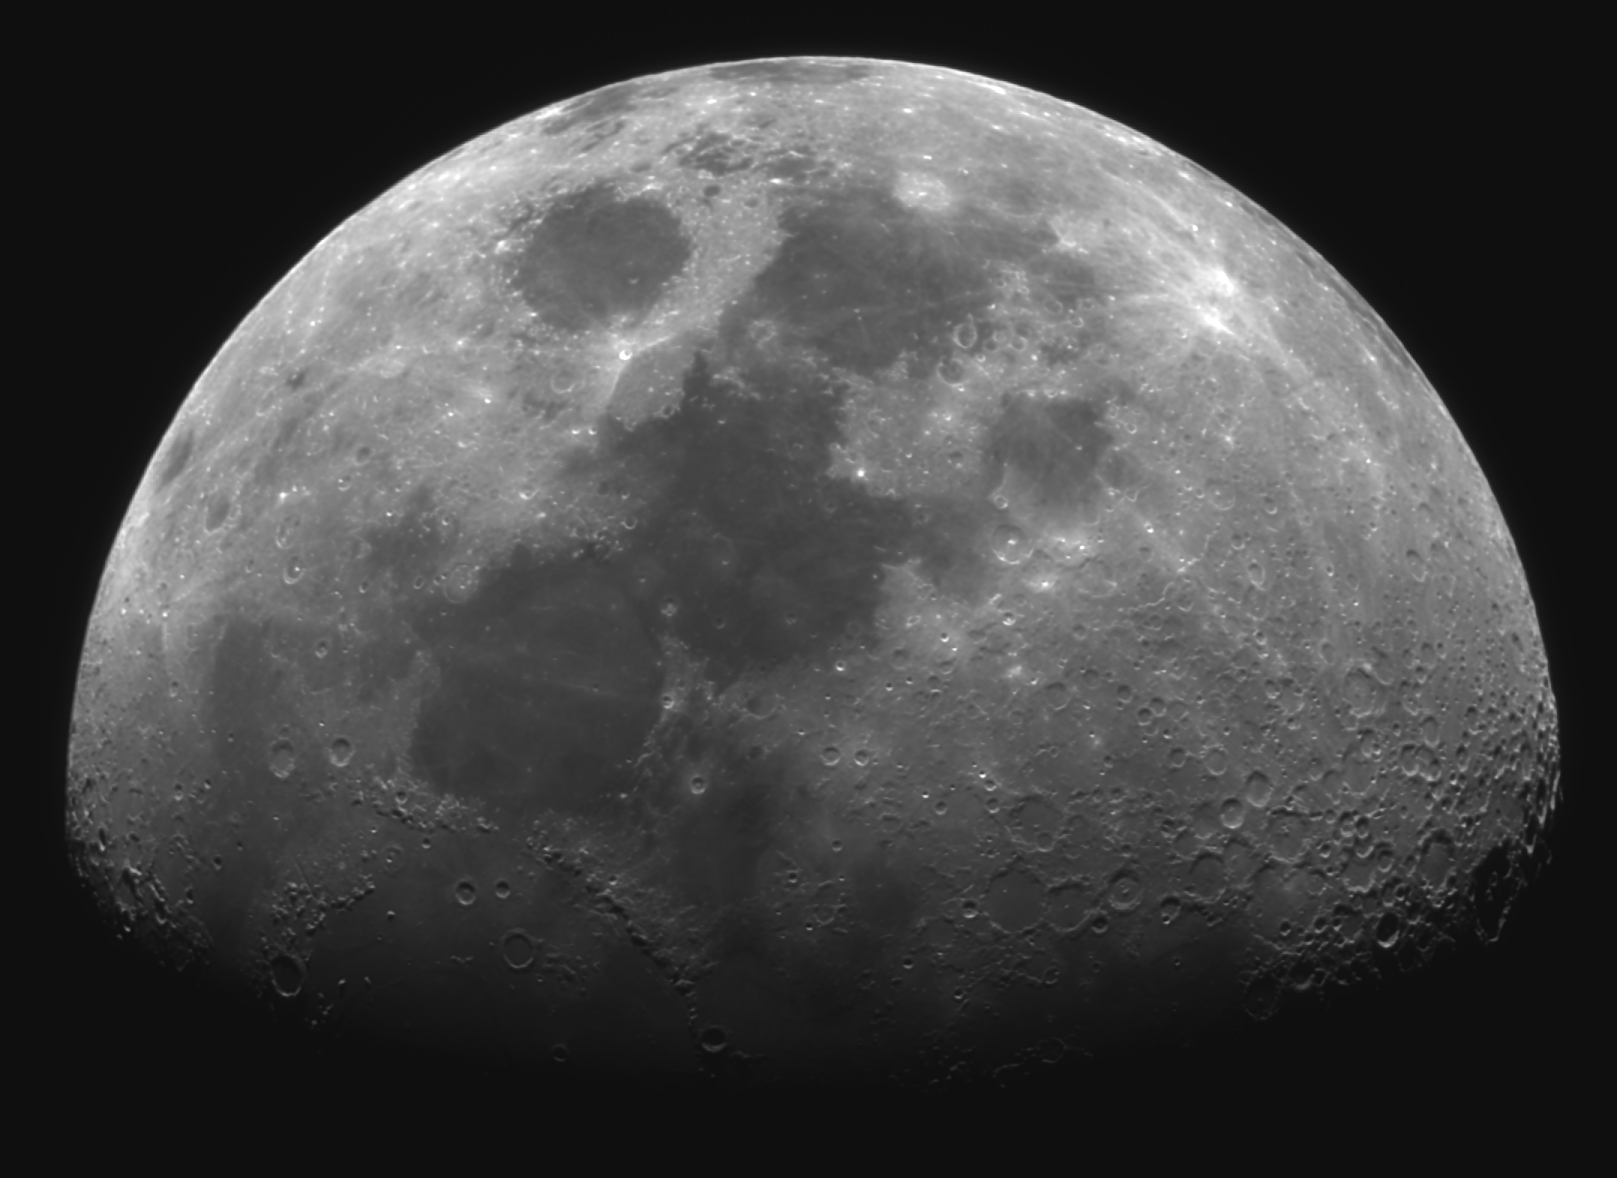 Moon_2021-12-12_ASI120MC_Clear_Affinity_Crop_Landscape_BW-Default_Unsharp-Mask-1.5-3.035-0_Exposure-1-stop.jpg